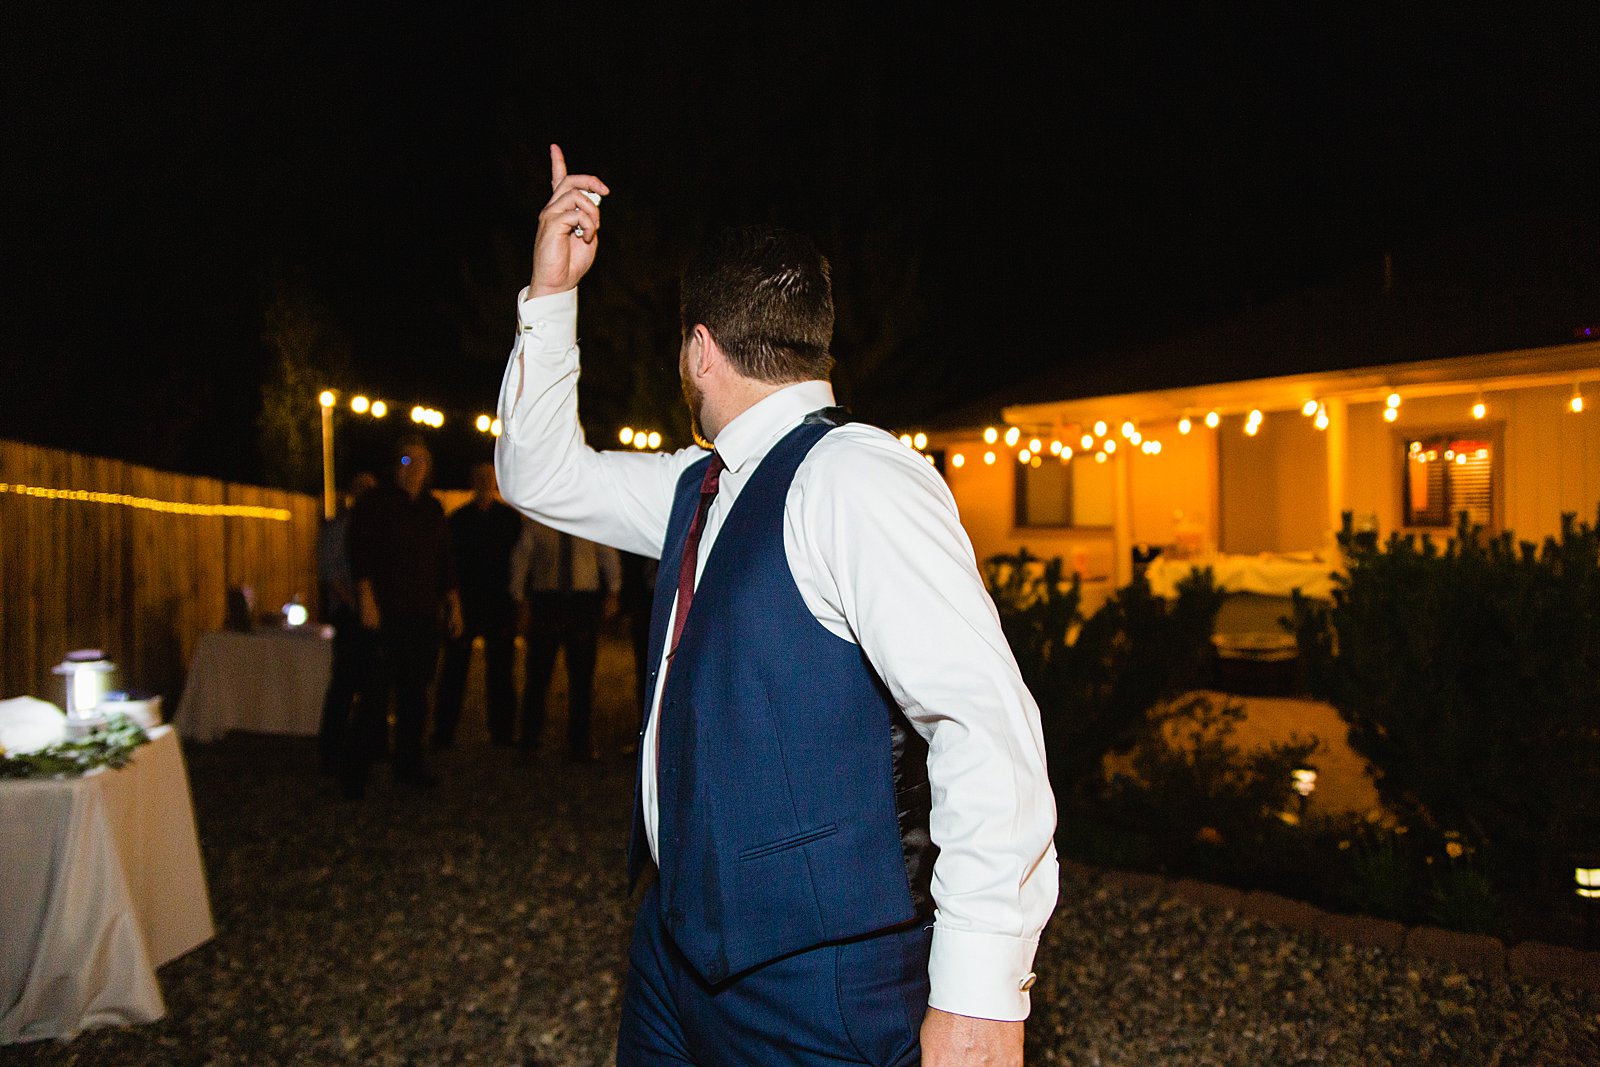 Garter toss at backyard wedding reception by Flagstaff wedding photographer PMA Photography.